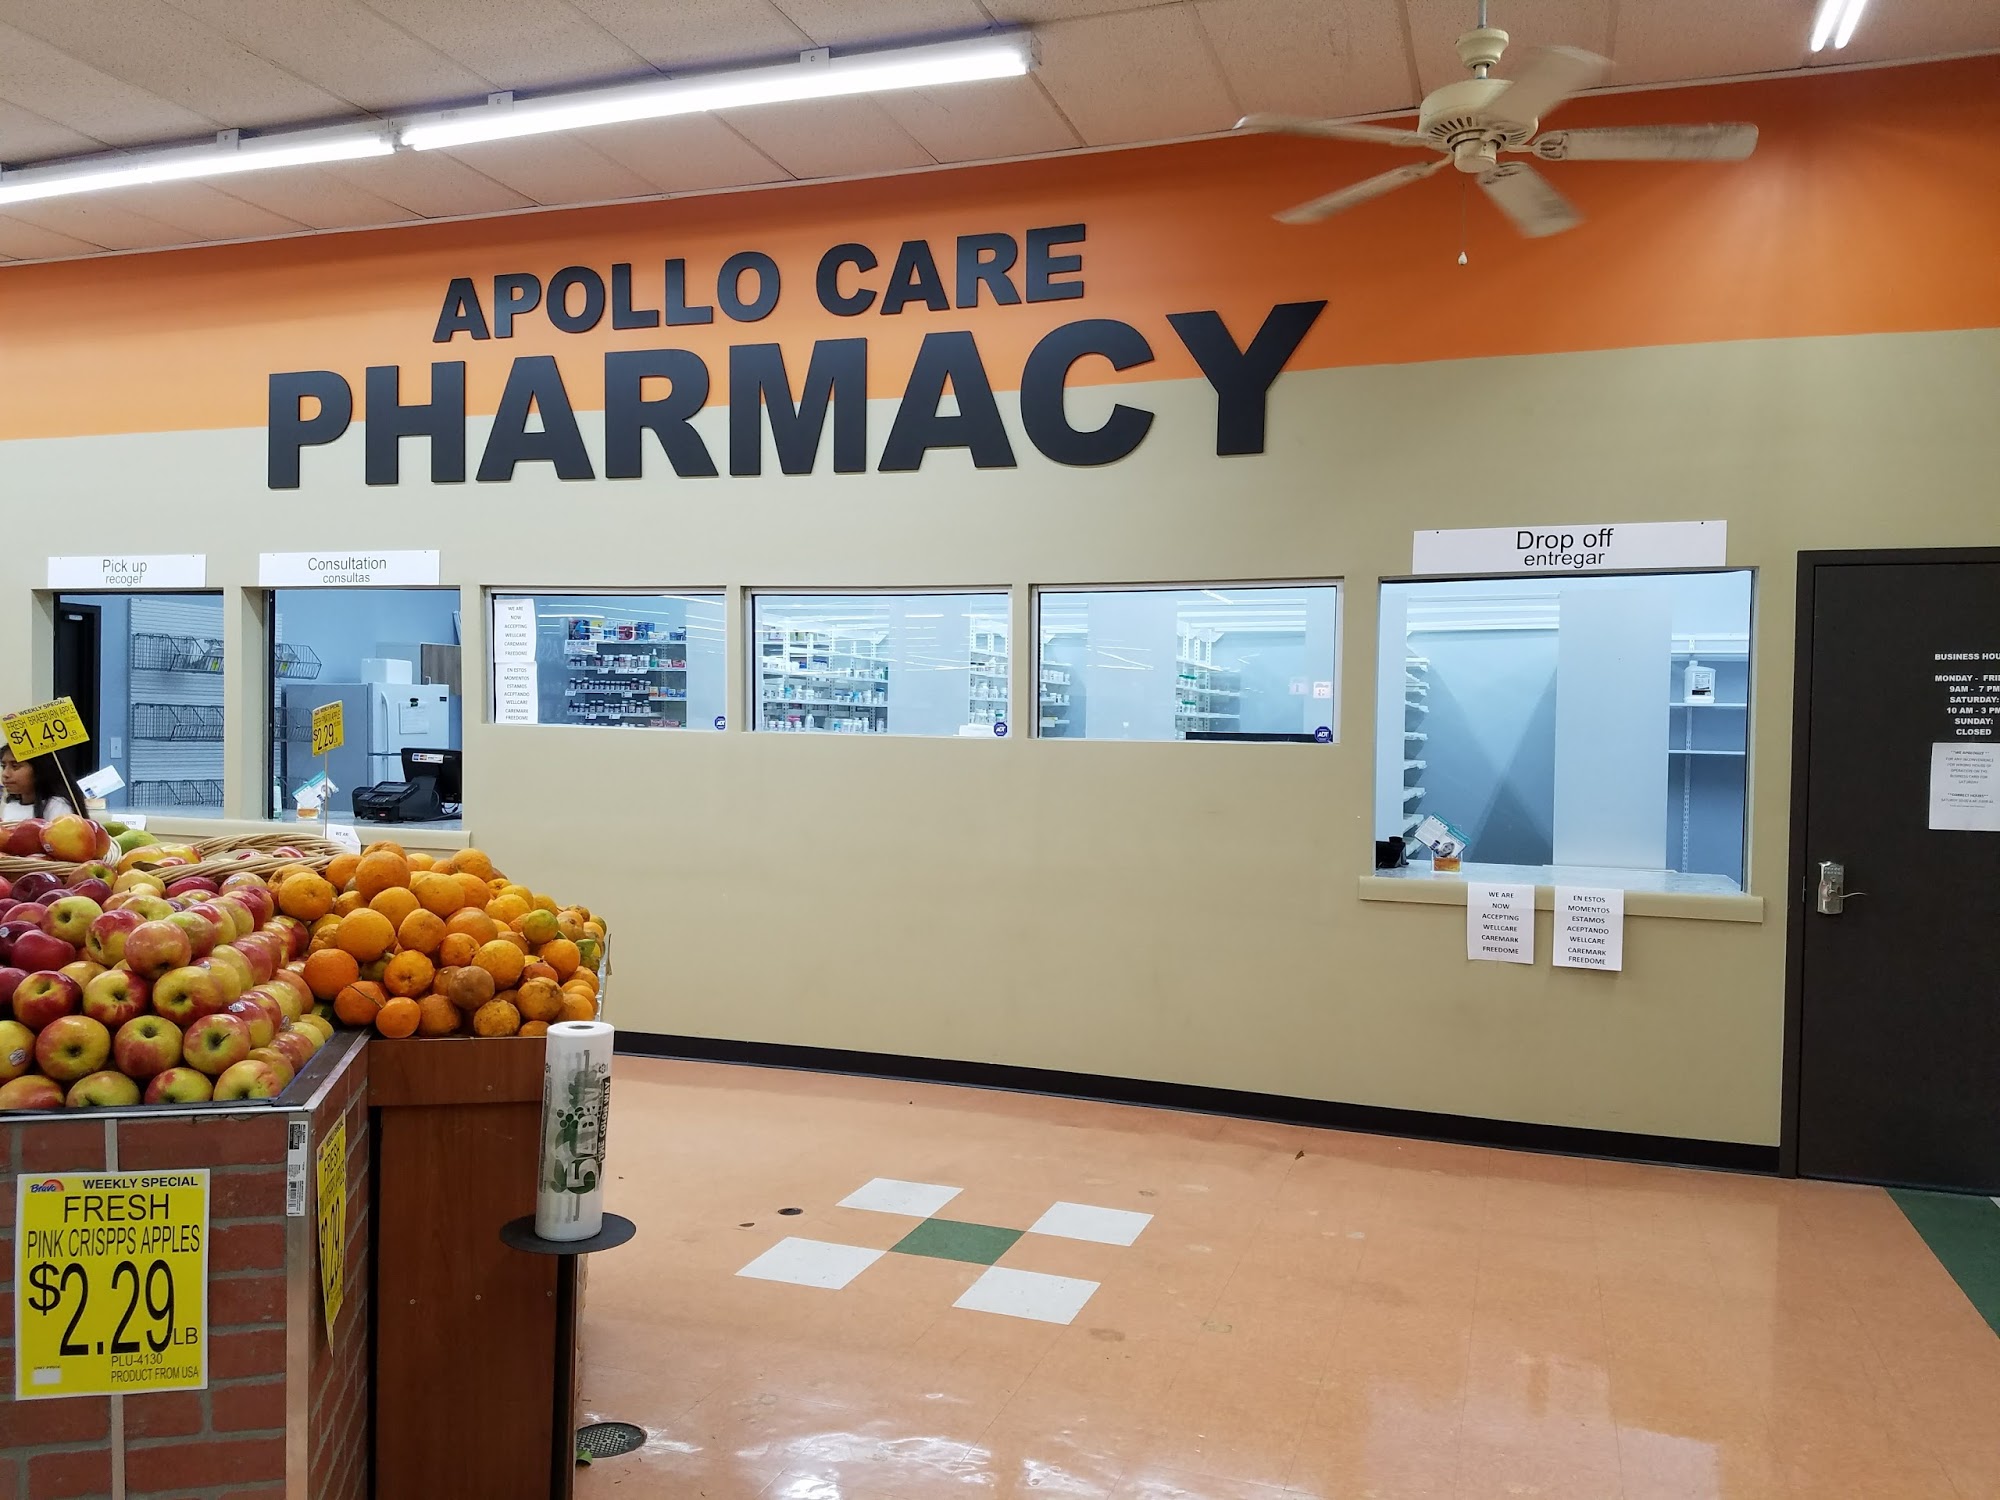 Apollo Care Pharmacy